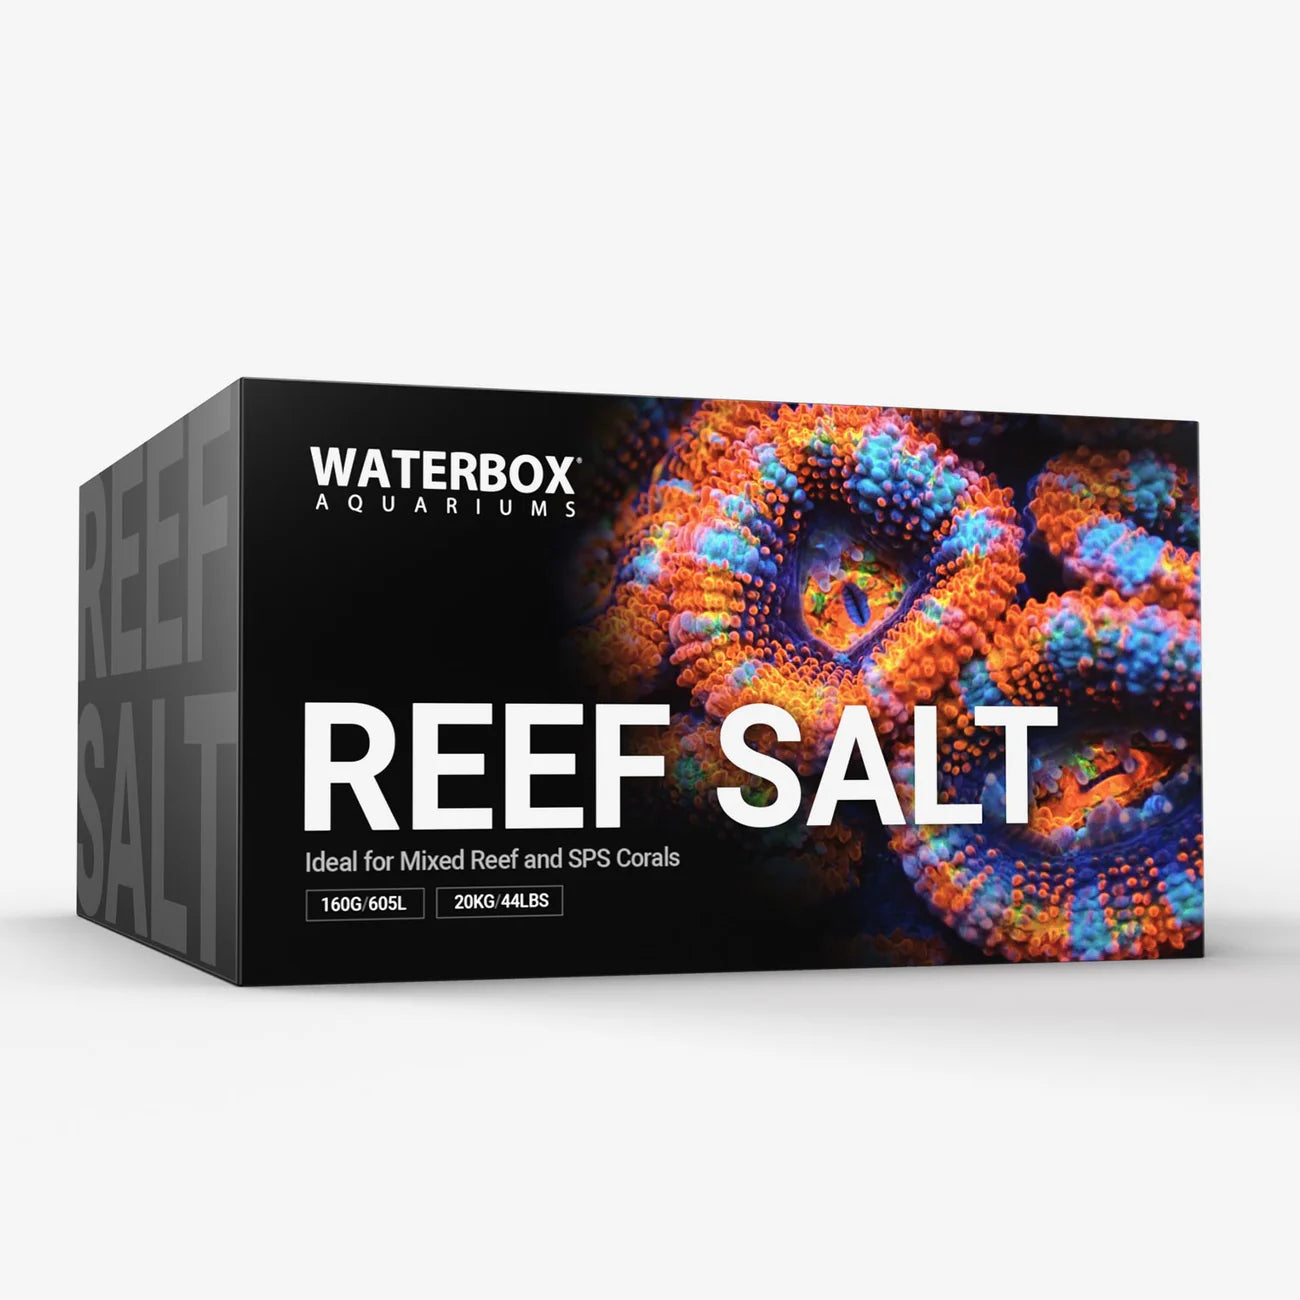 Reef Salt - Serenity Provision